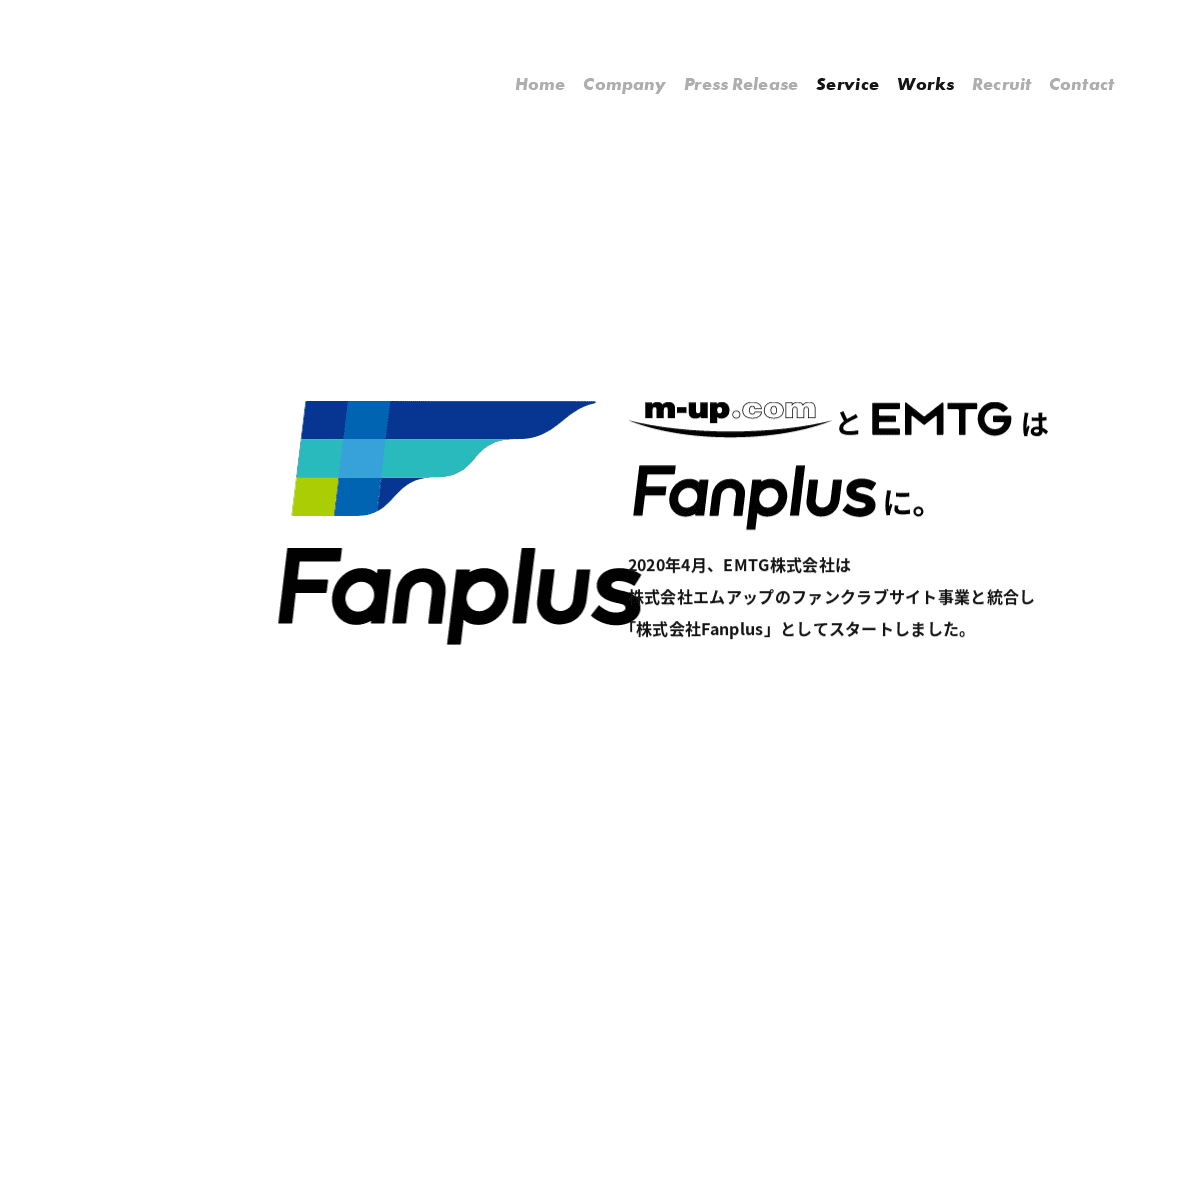 A complete backup of https://fanplus.co.jp